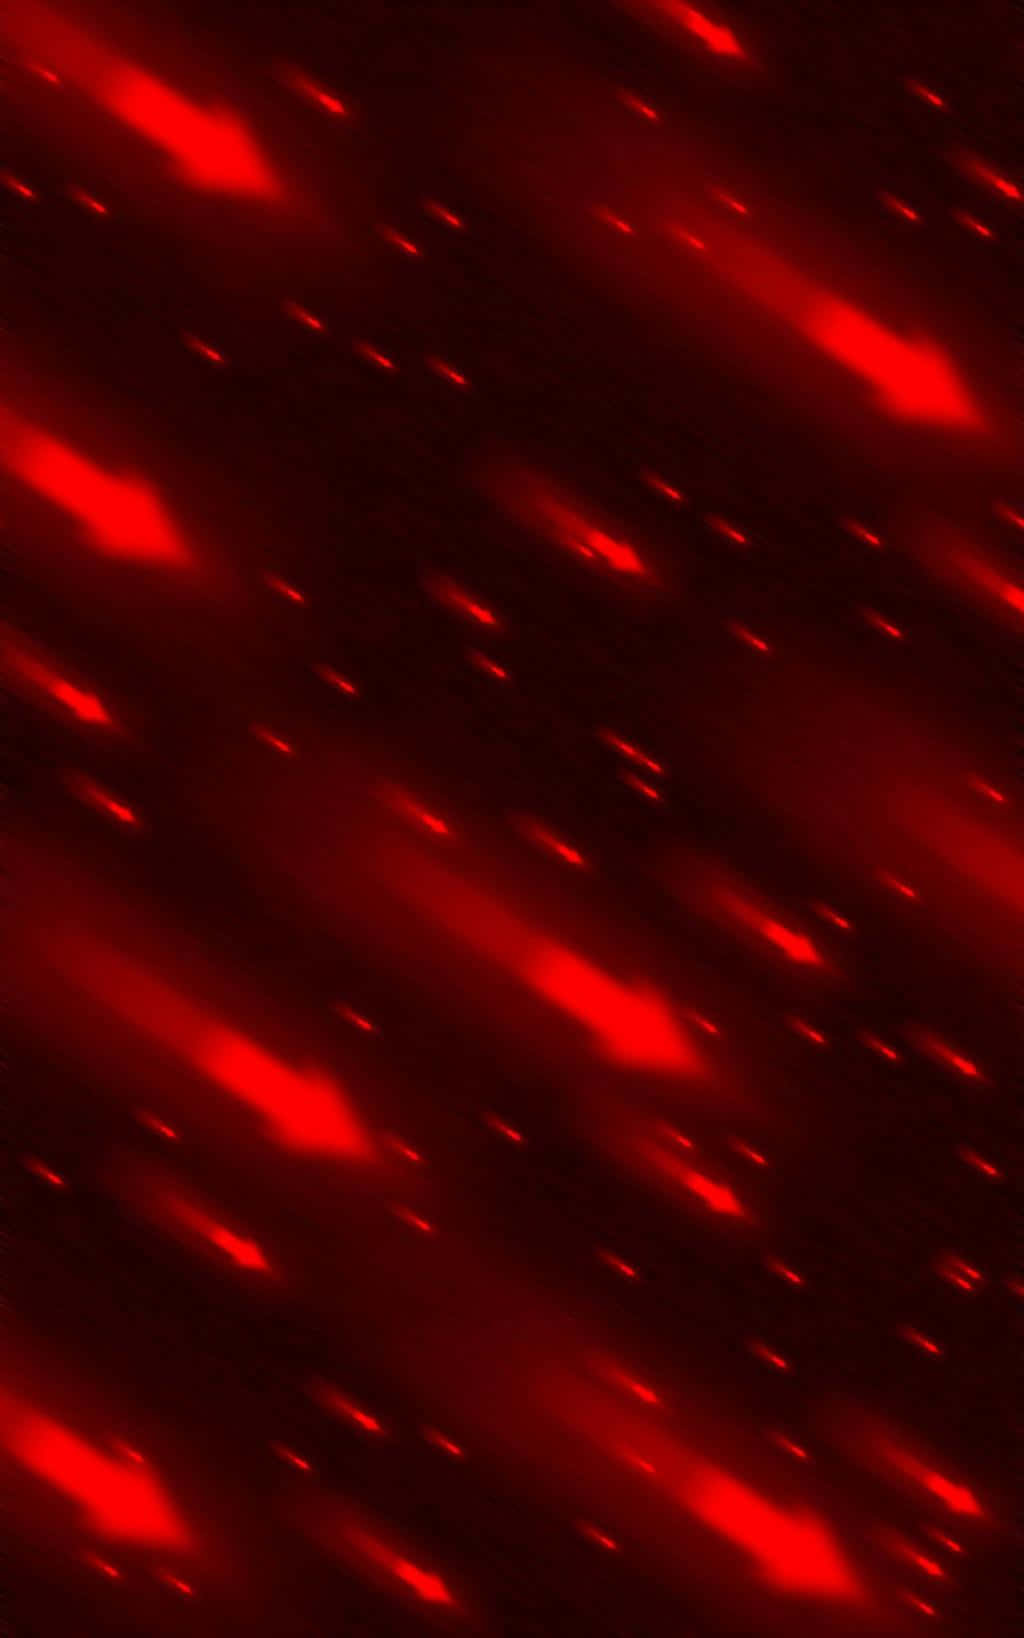 Red Light Streaks On A Dark Background